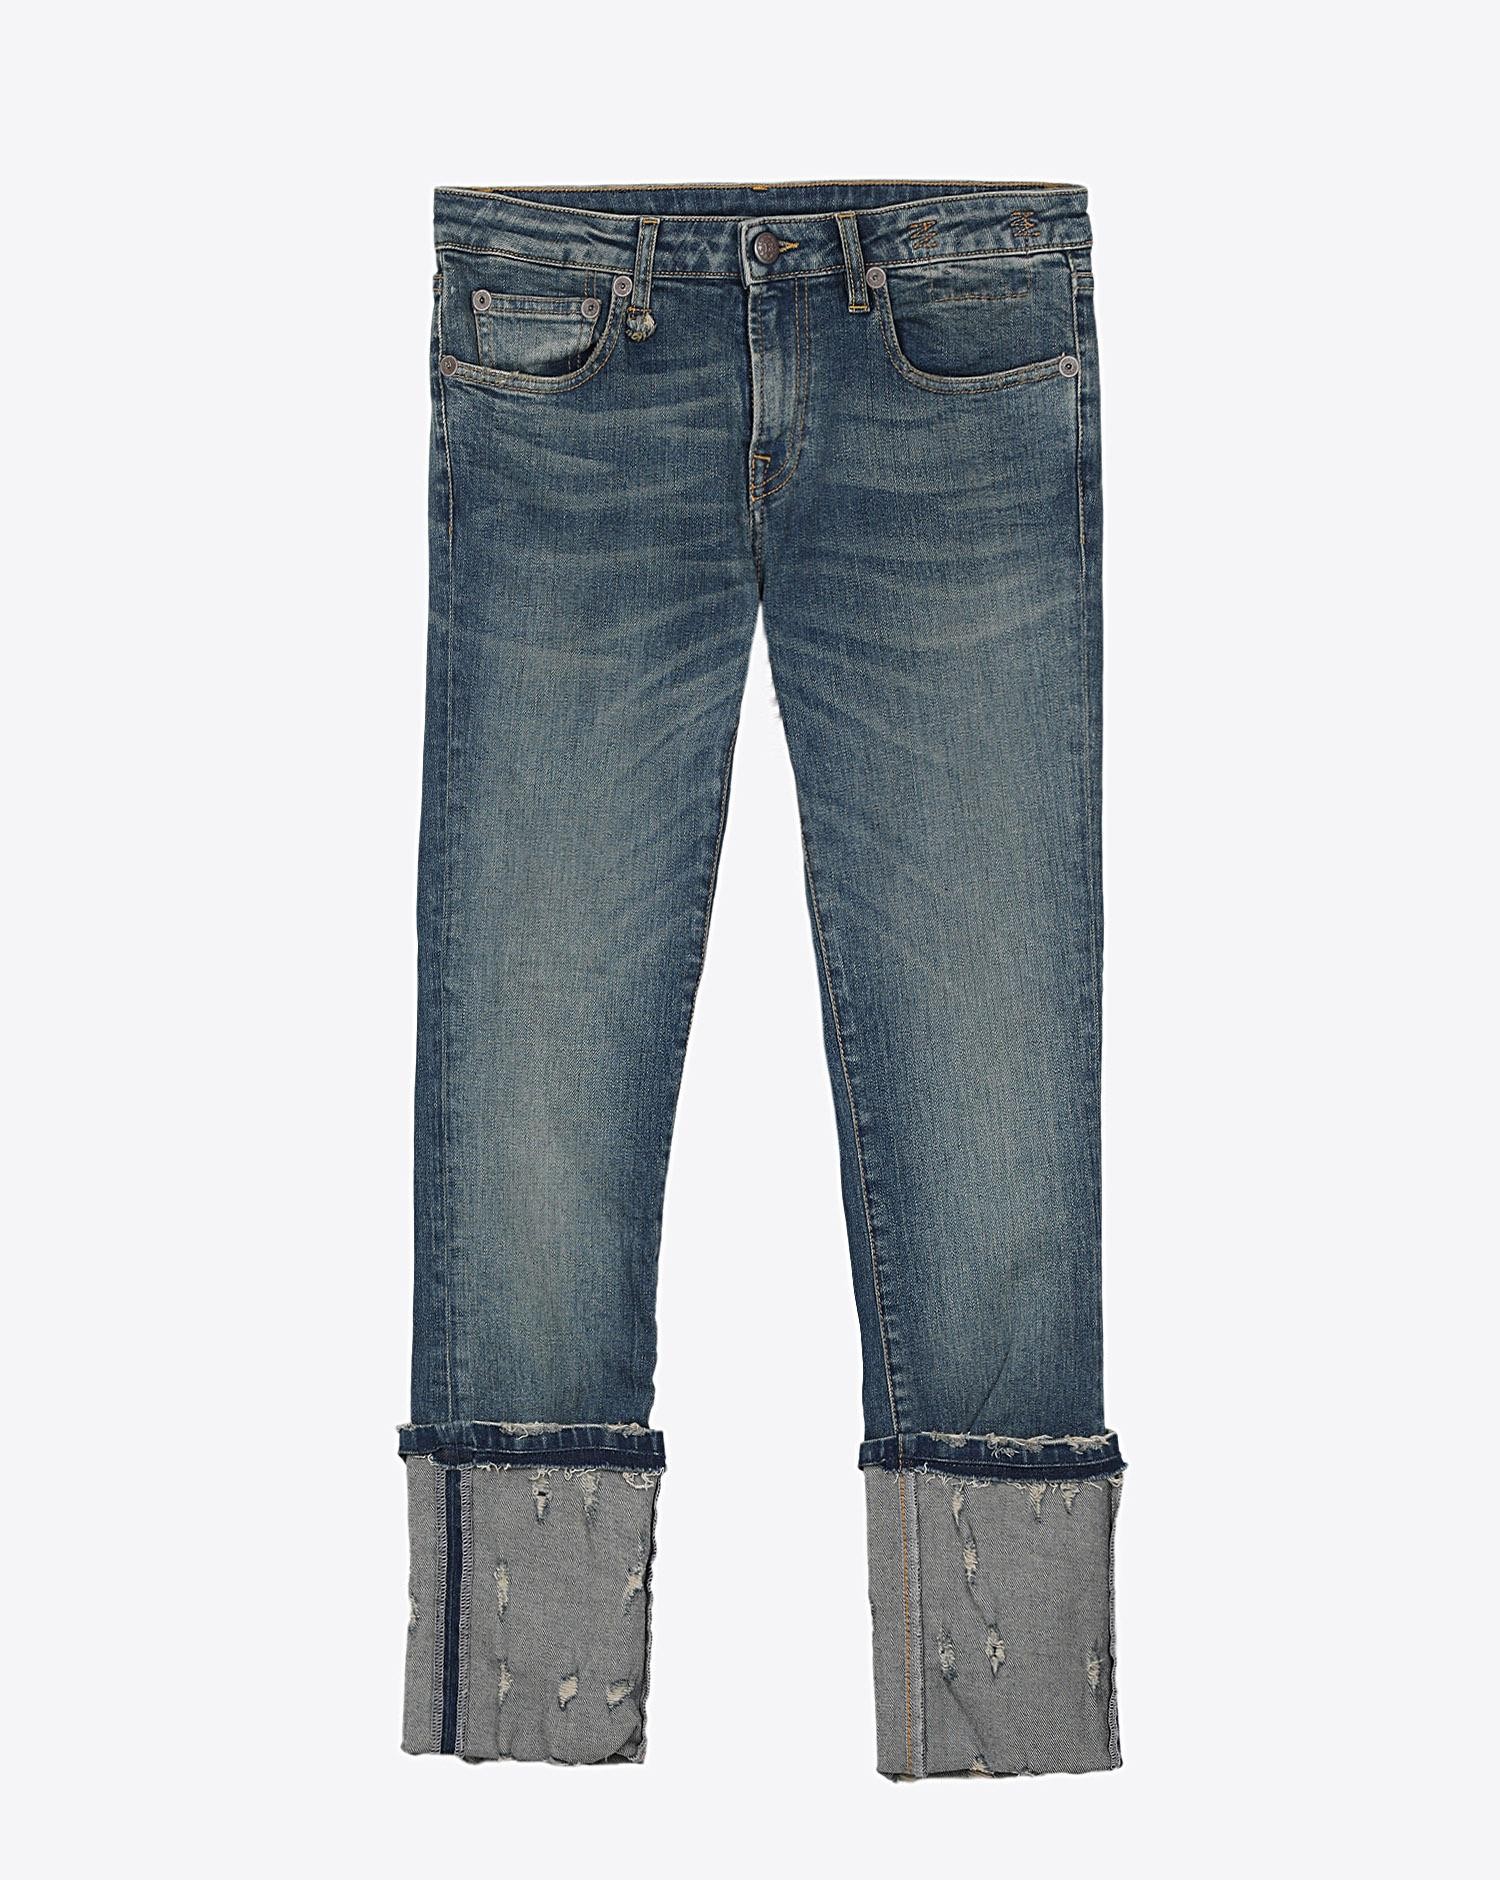 Jeans Kate skinny bleu grand revers R13 Denim